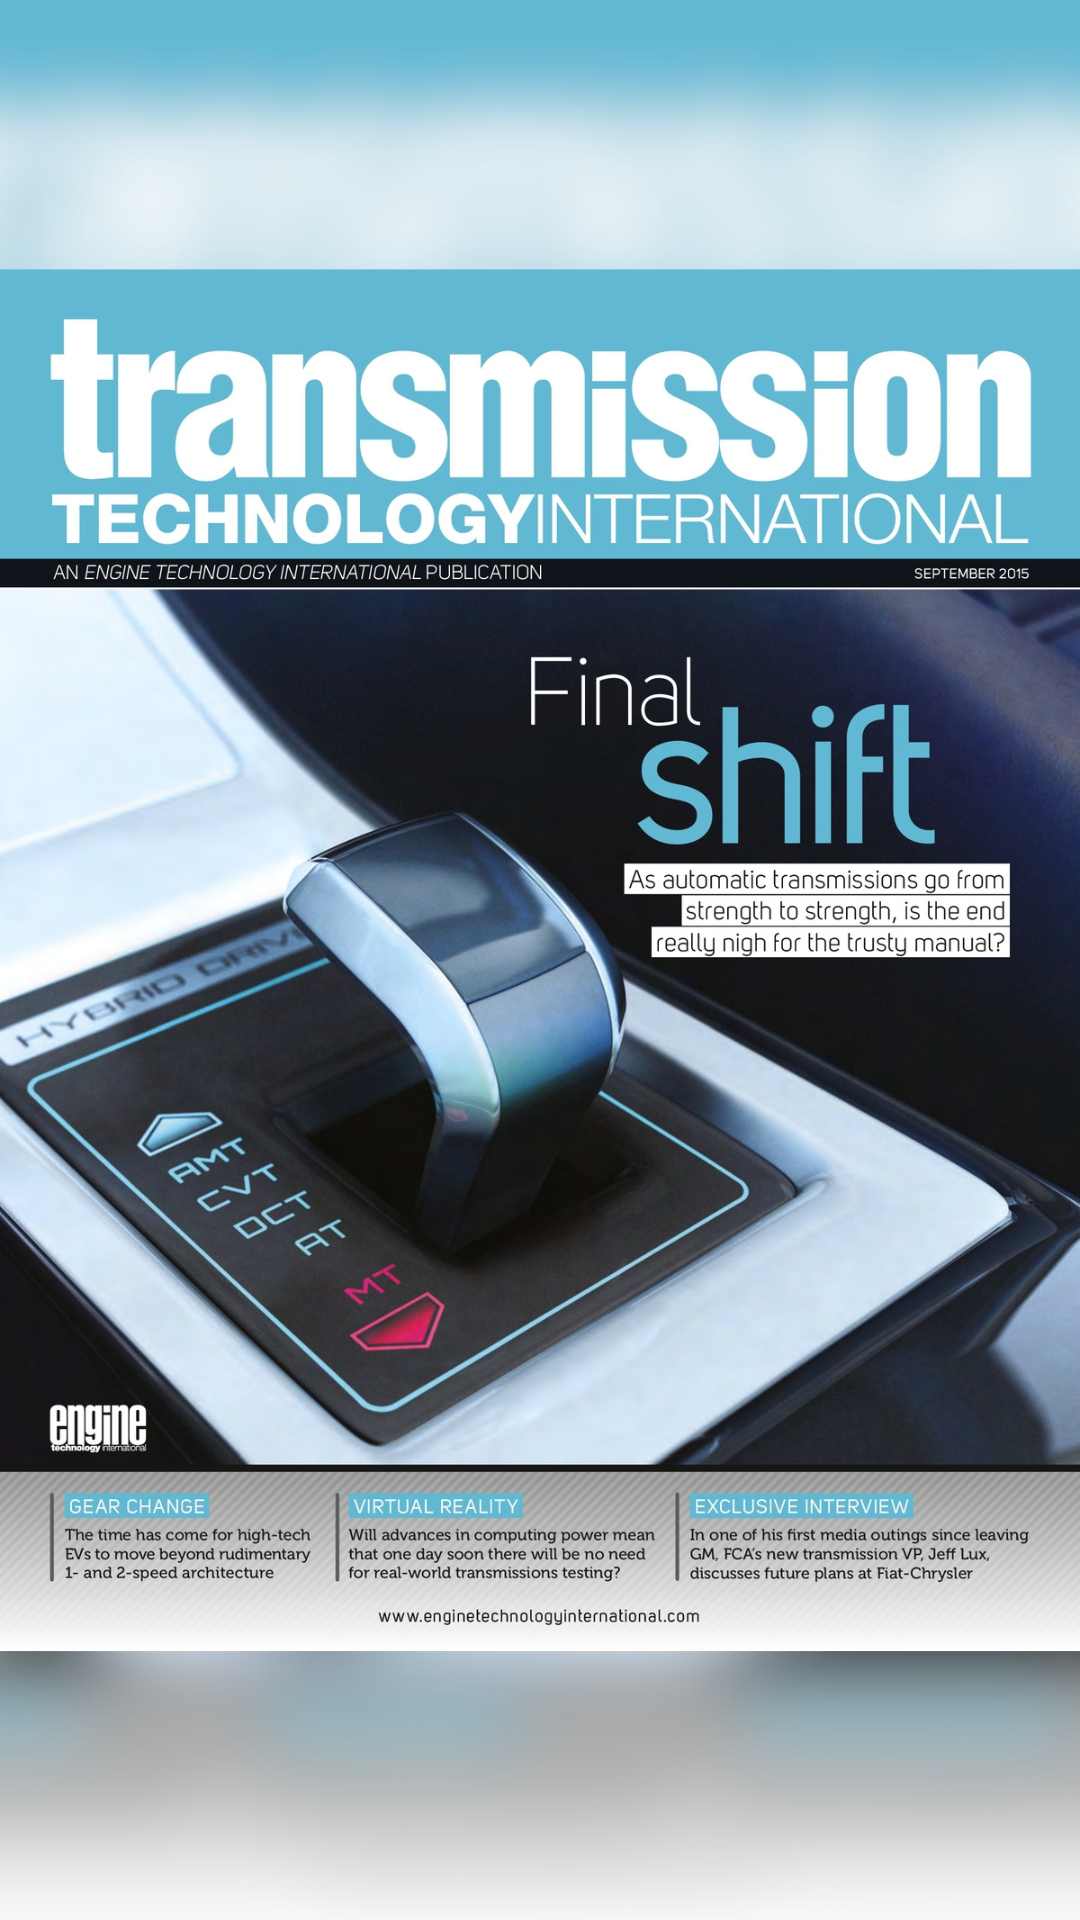 Transmission Technology International Magazine front cover September 2015 'Final Shift'.